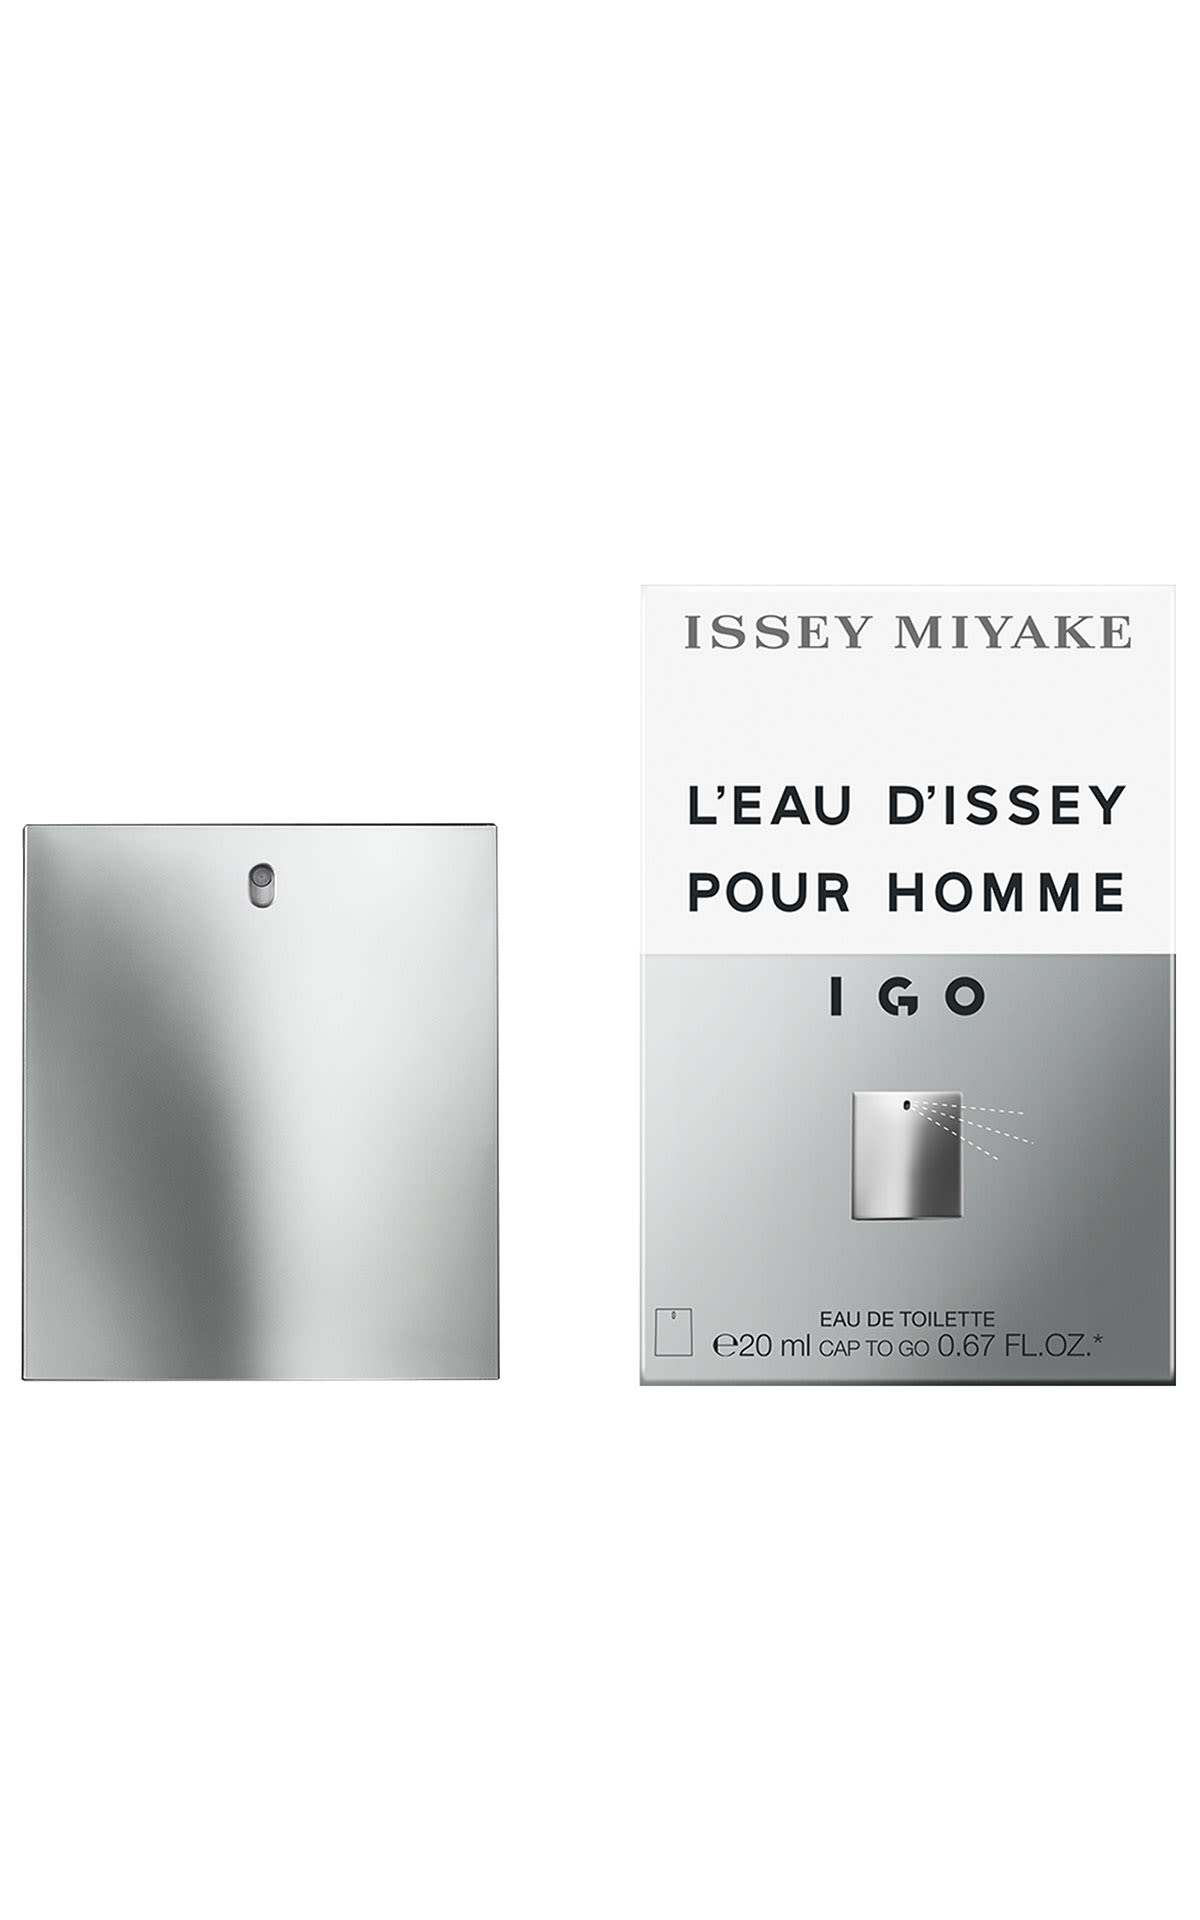 Beaute Prestige International Issey Miyake L'Eau d'Issey pour homme IGO EDT travel cap 20ml from Bicester Village